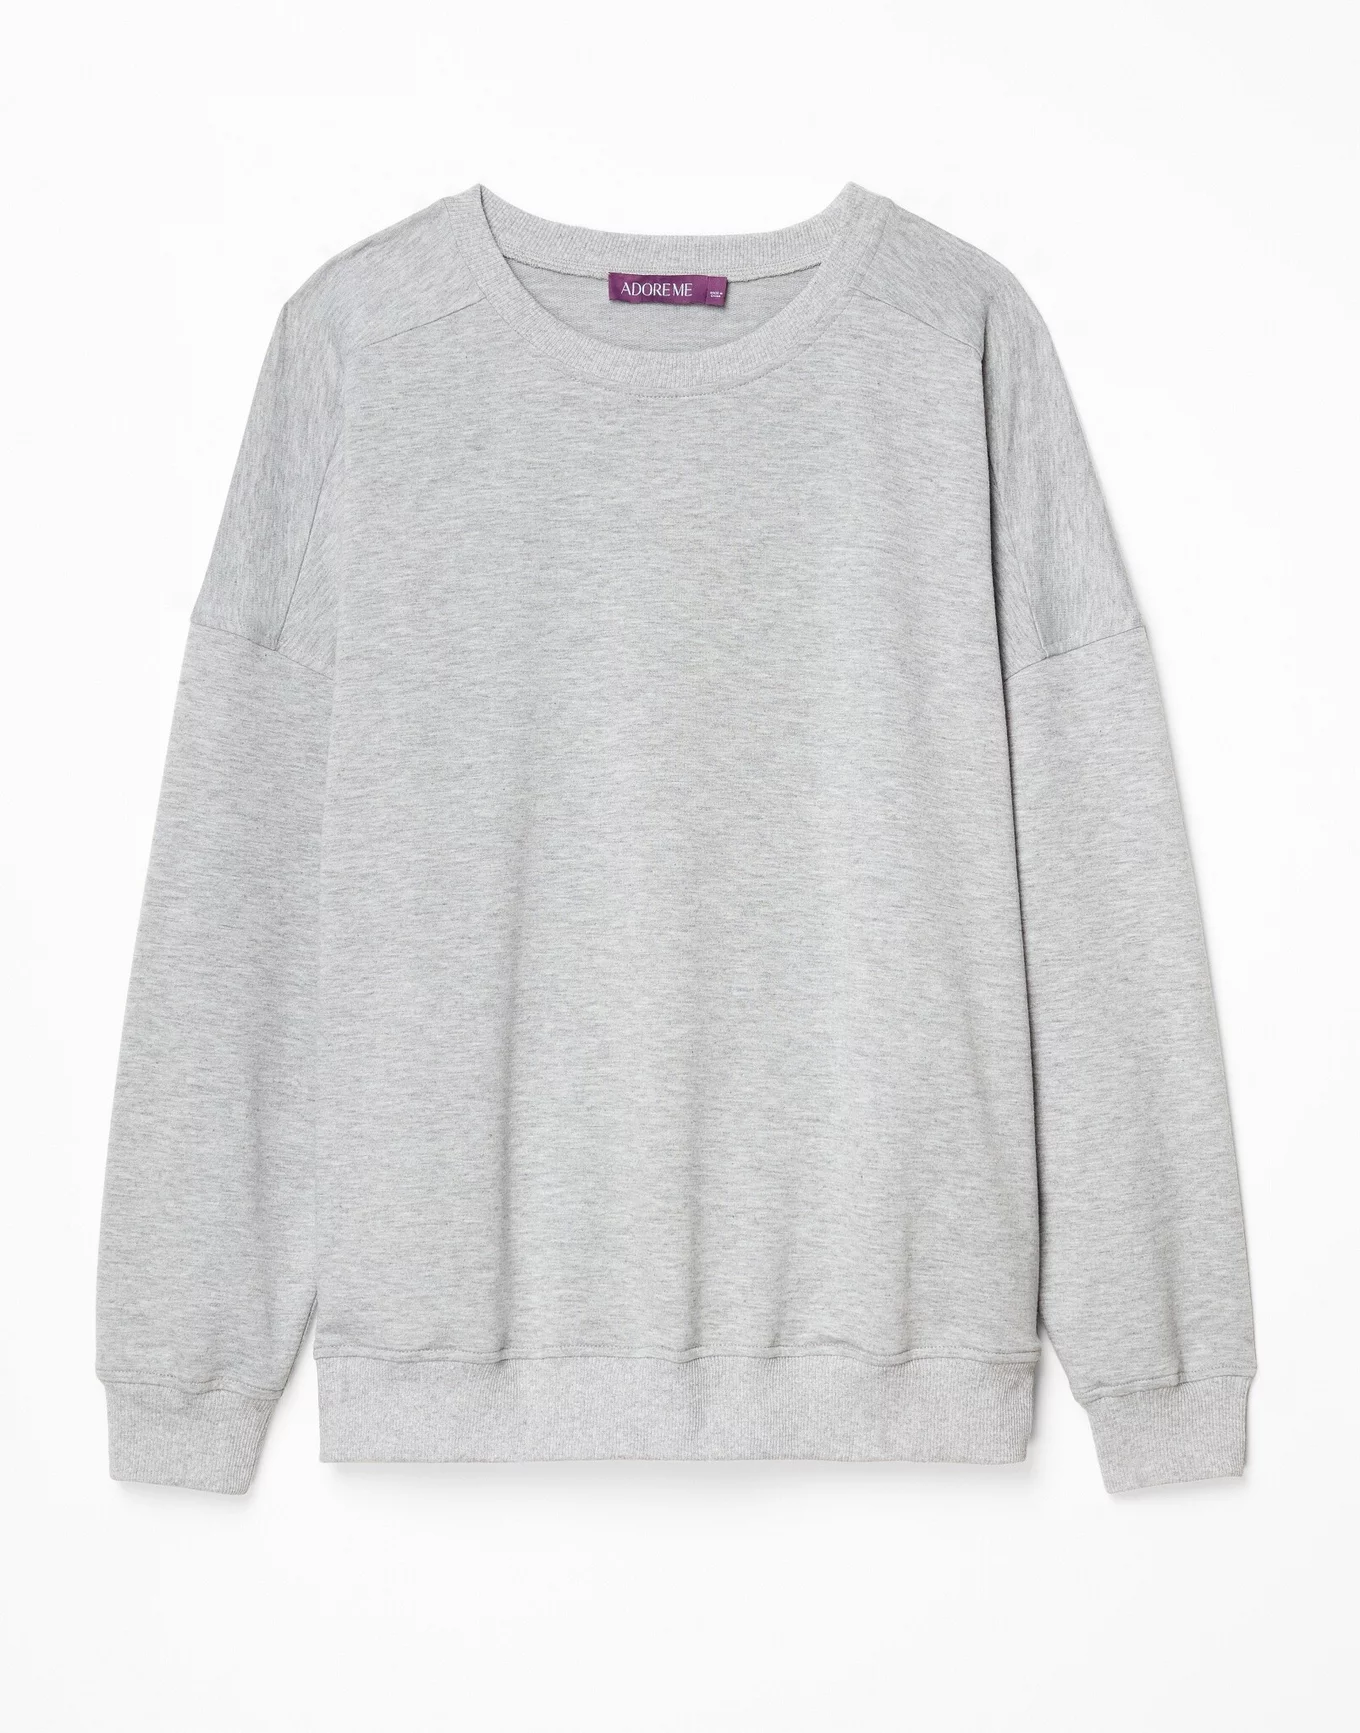 Sky Sweatshirt Gray Sweatshirt, XS-XL | Adore Me